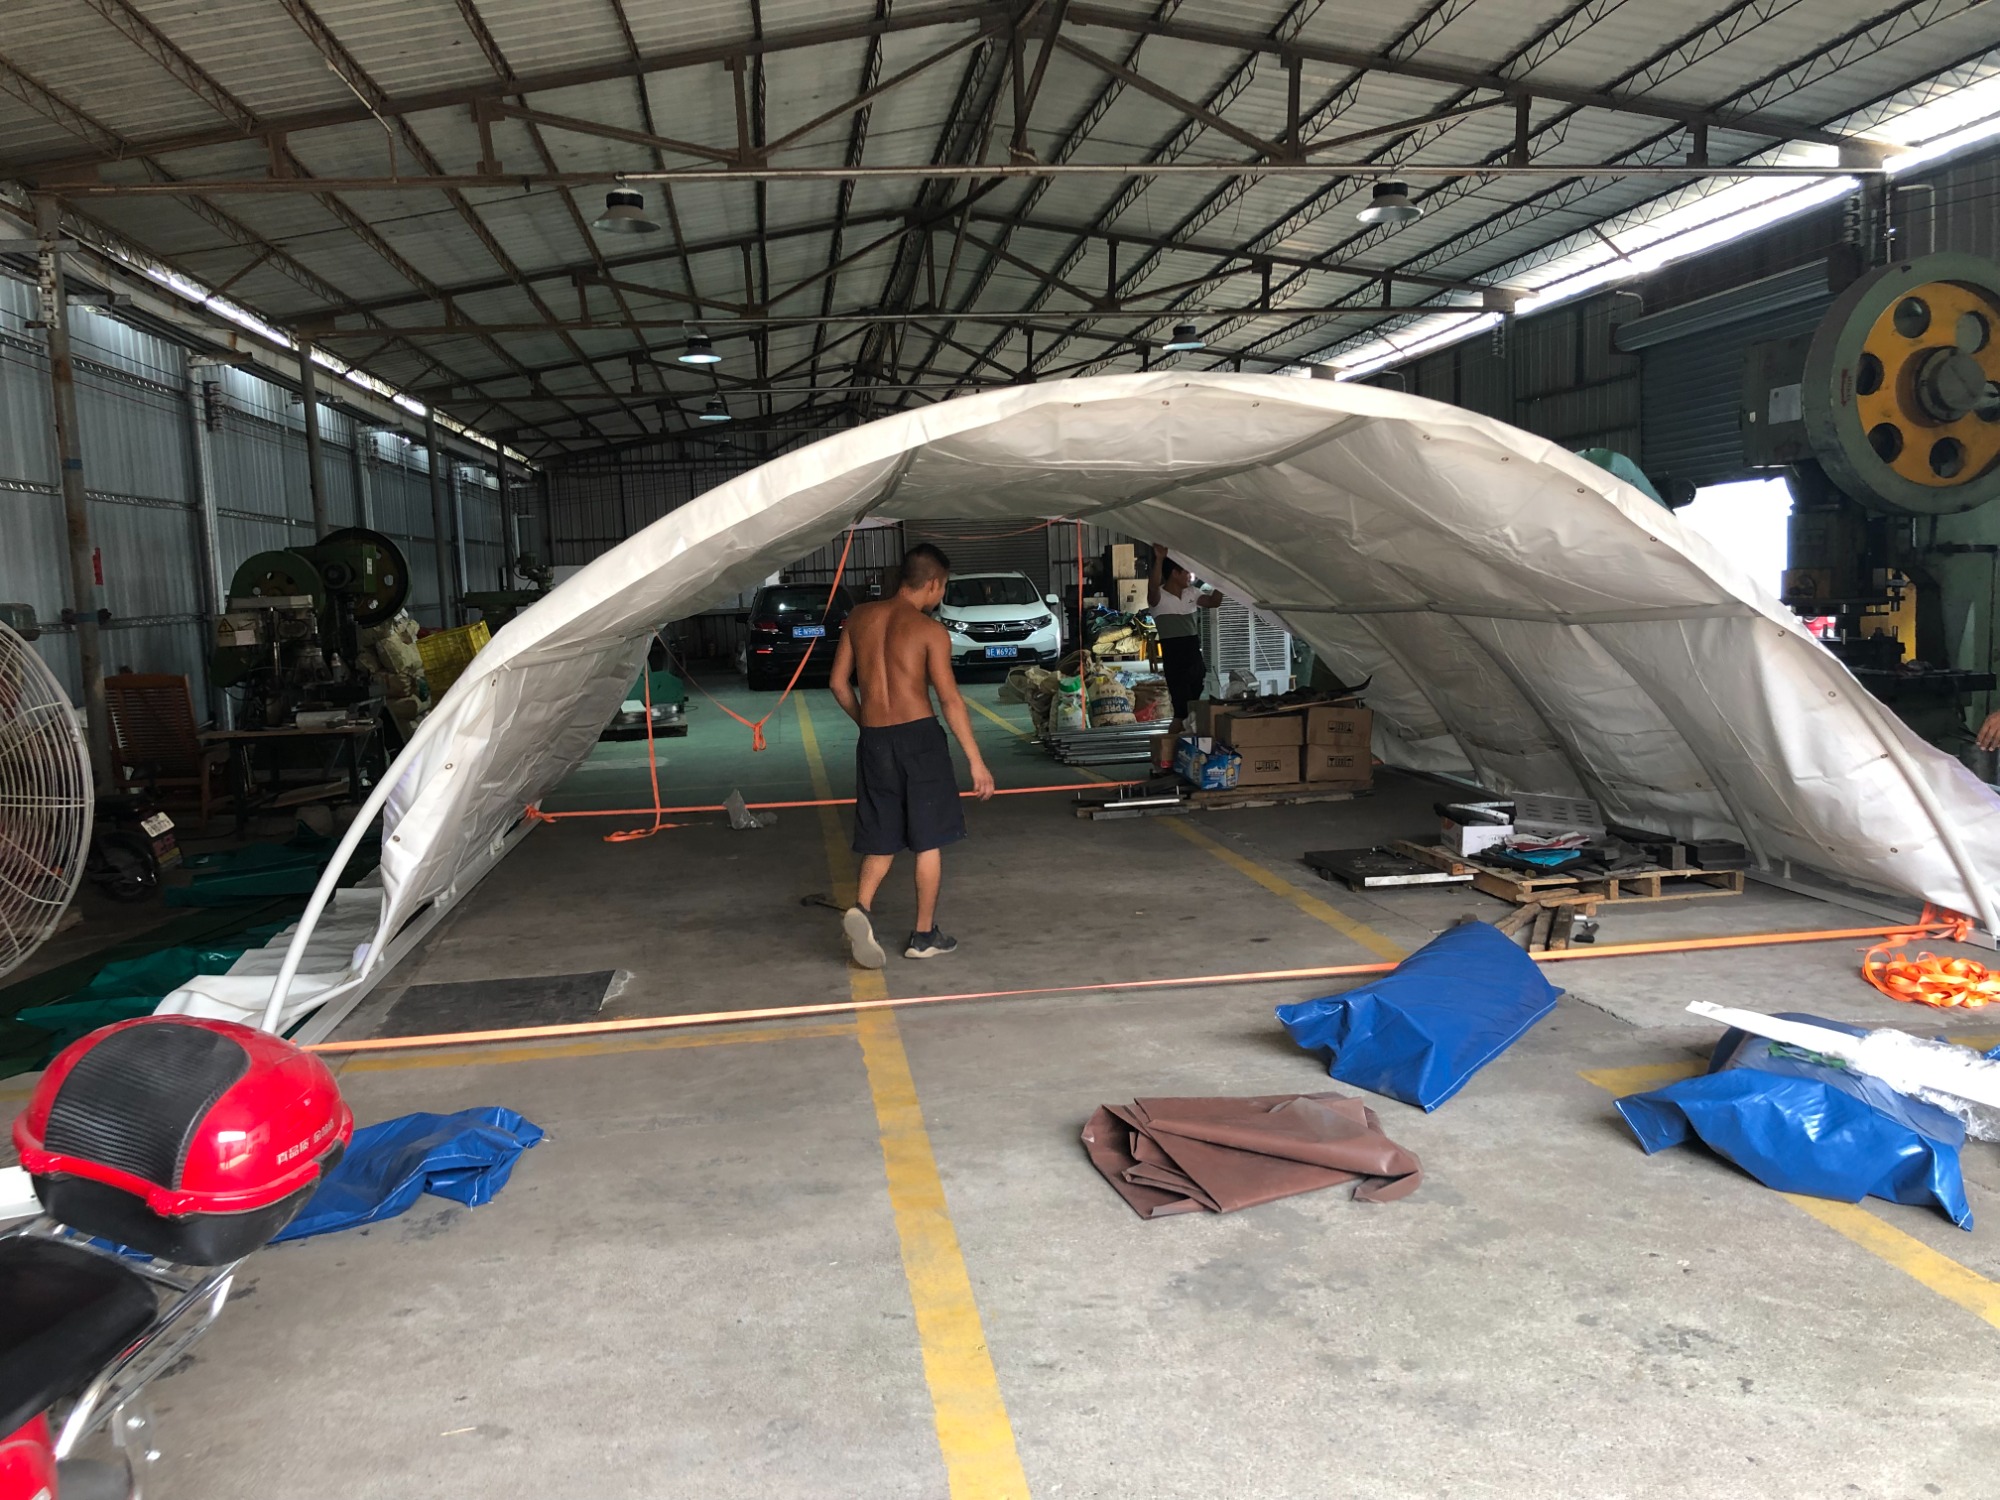 LTCANOY PVC Storage Shelter Tent - 20210930